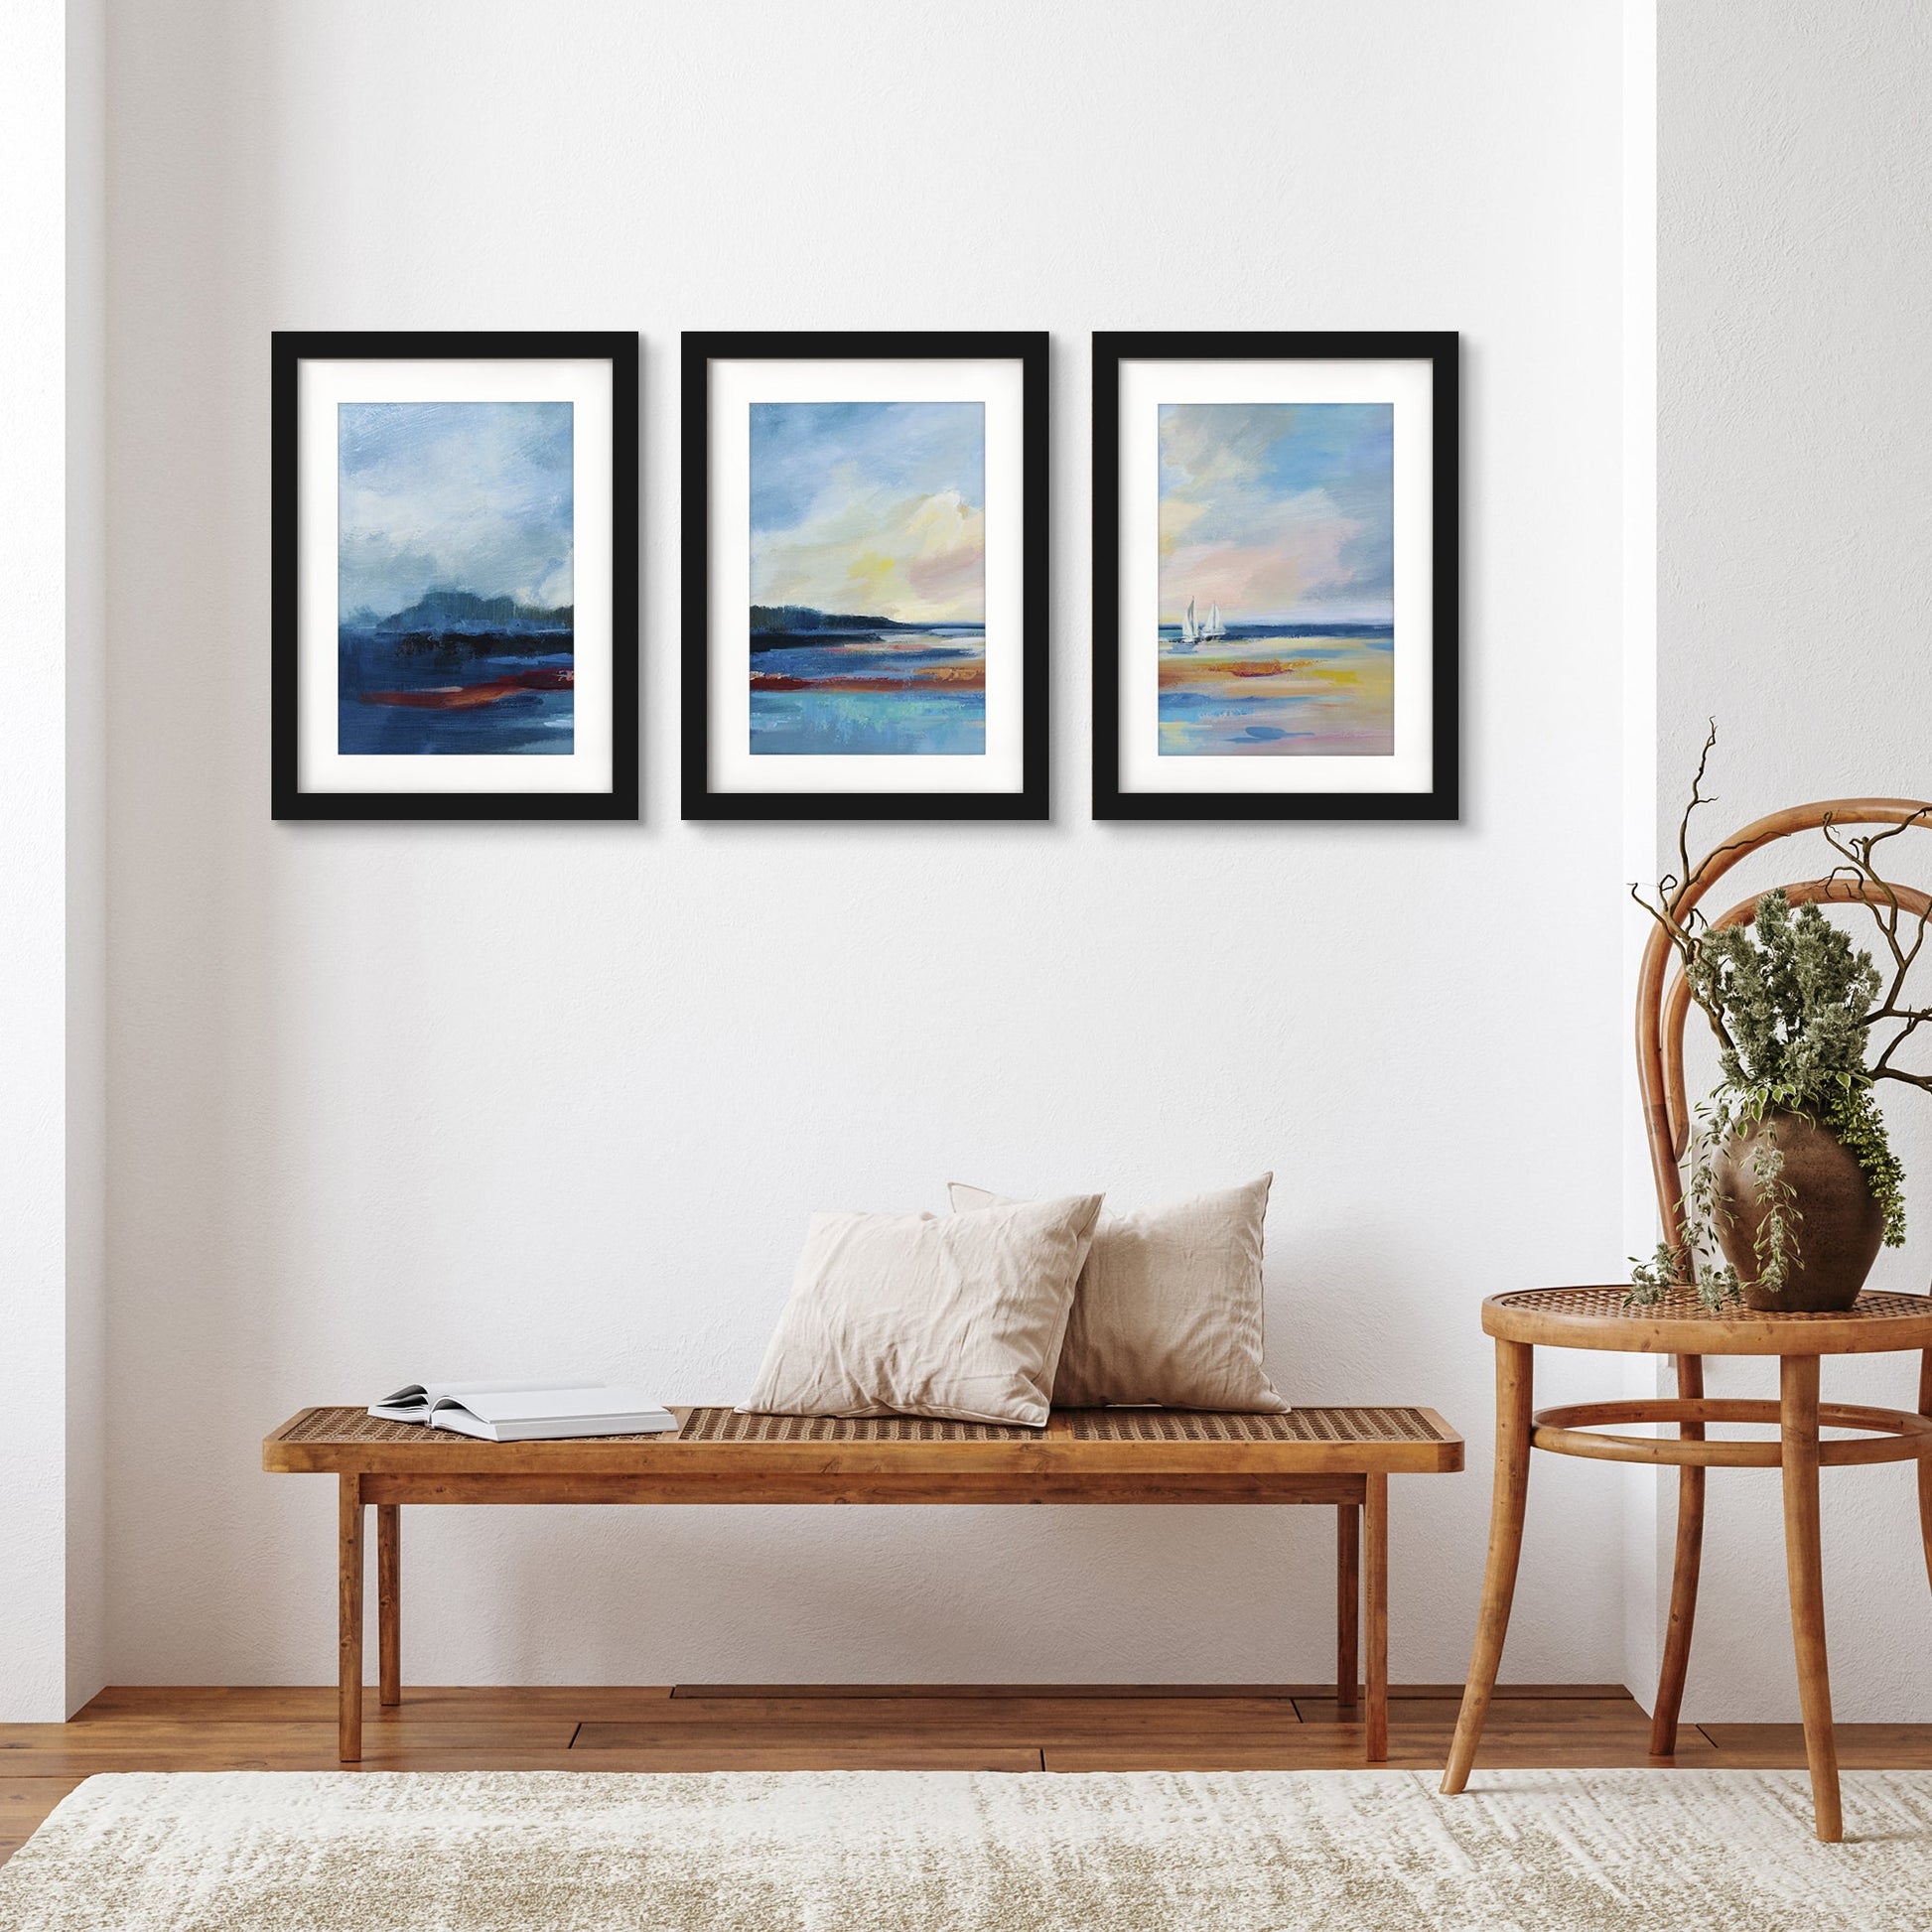 Wall Vassileva. 3 Sea Wall Silvia – Light of Set Framed and Set Ultramarine Gallery Print Americanflat Sky Art